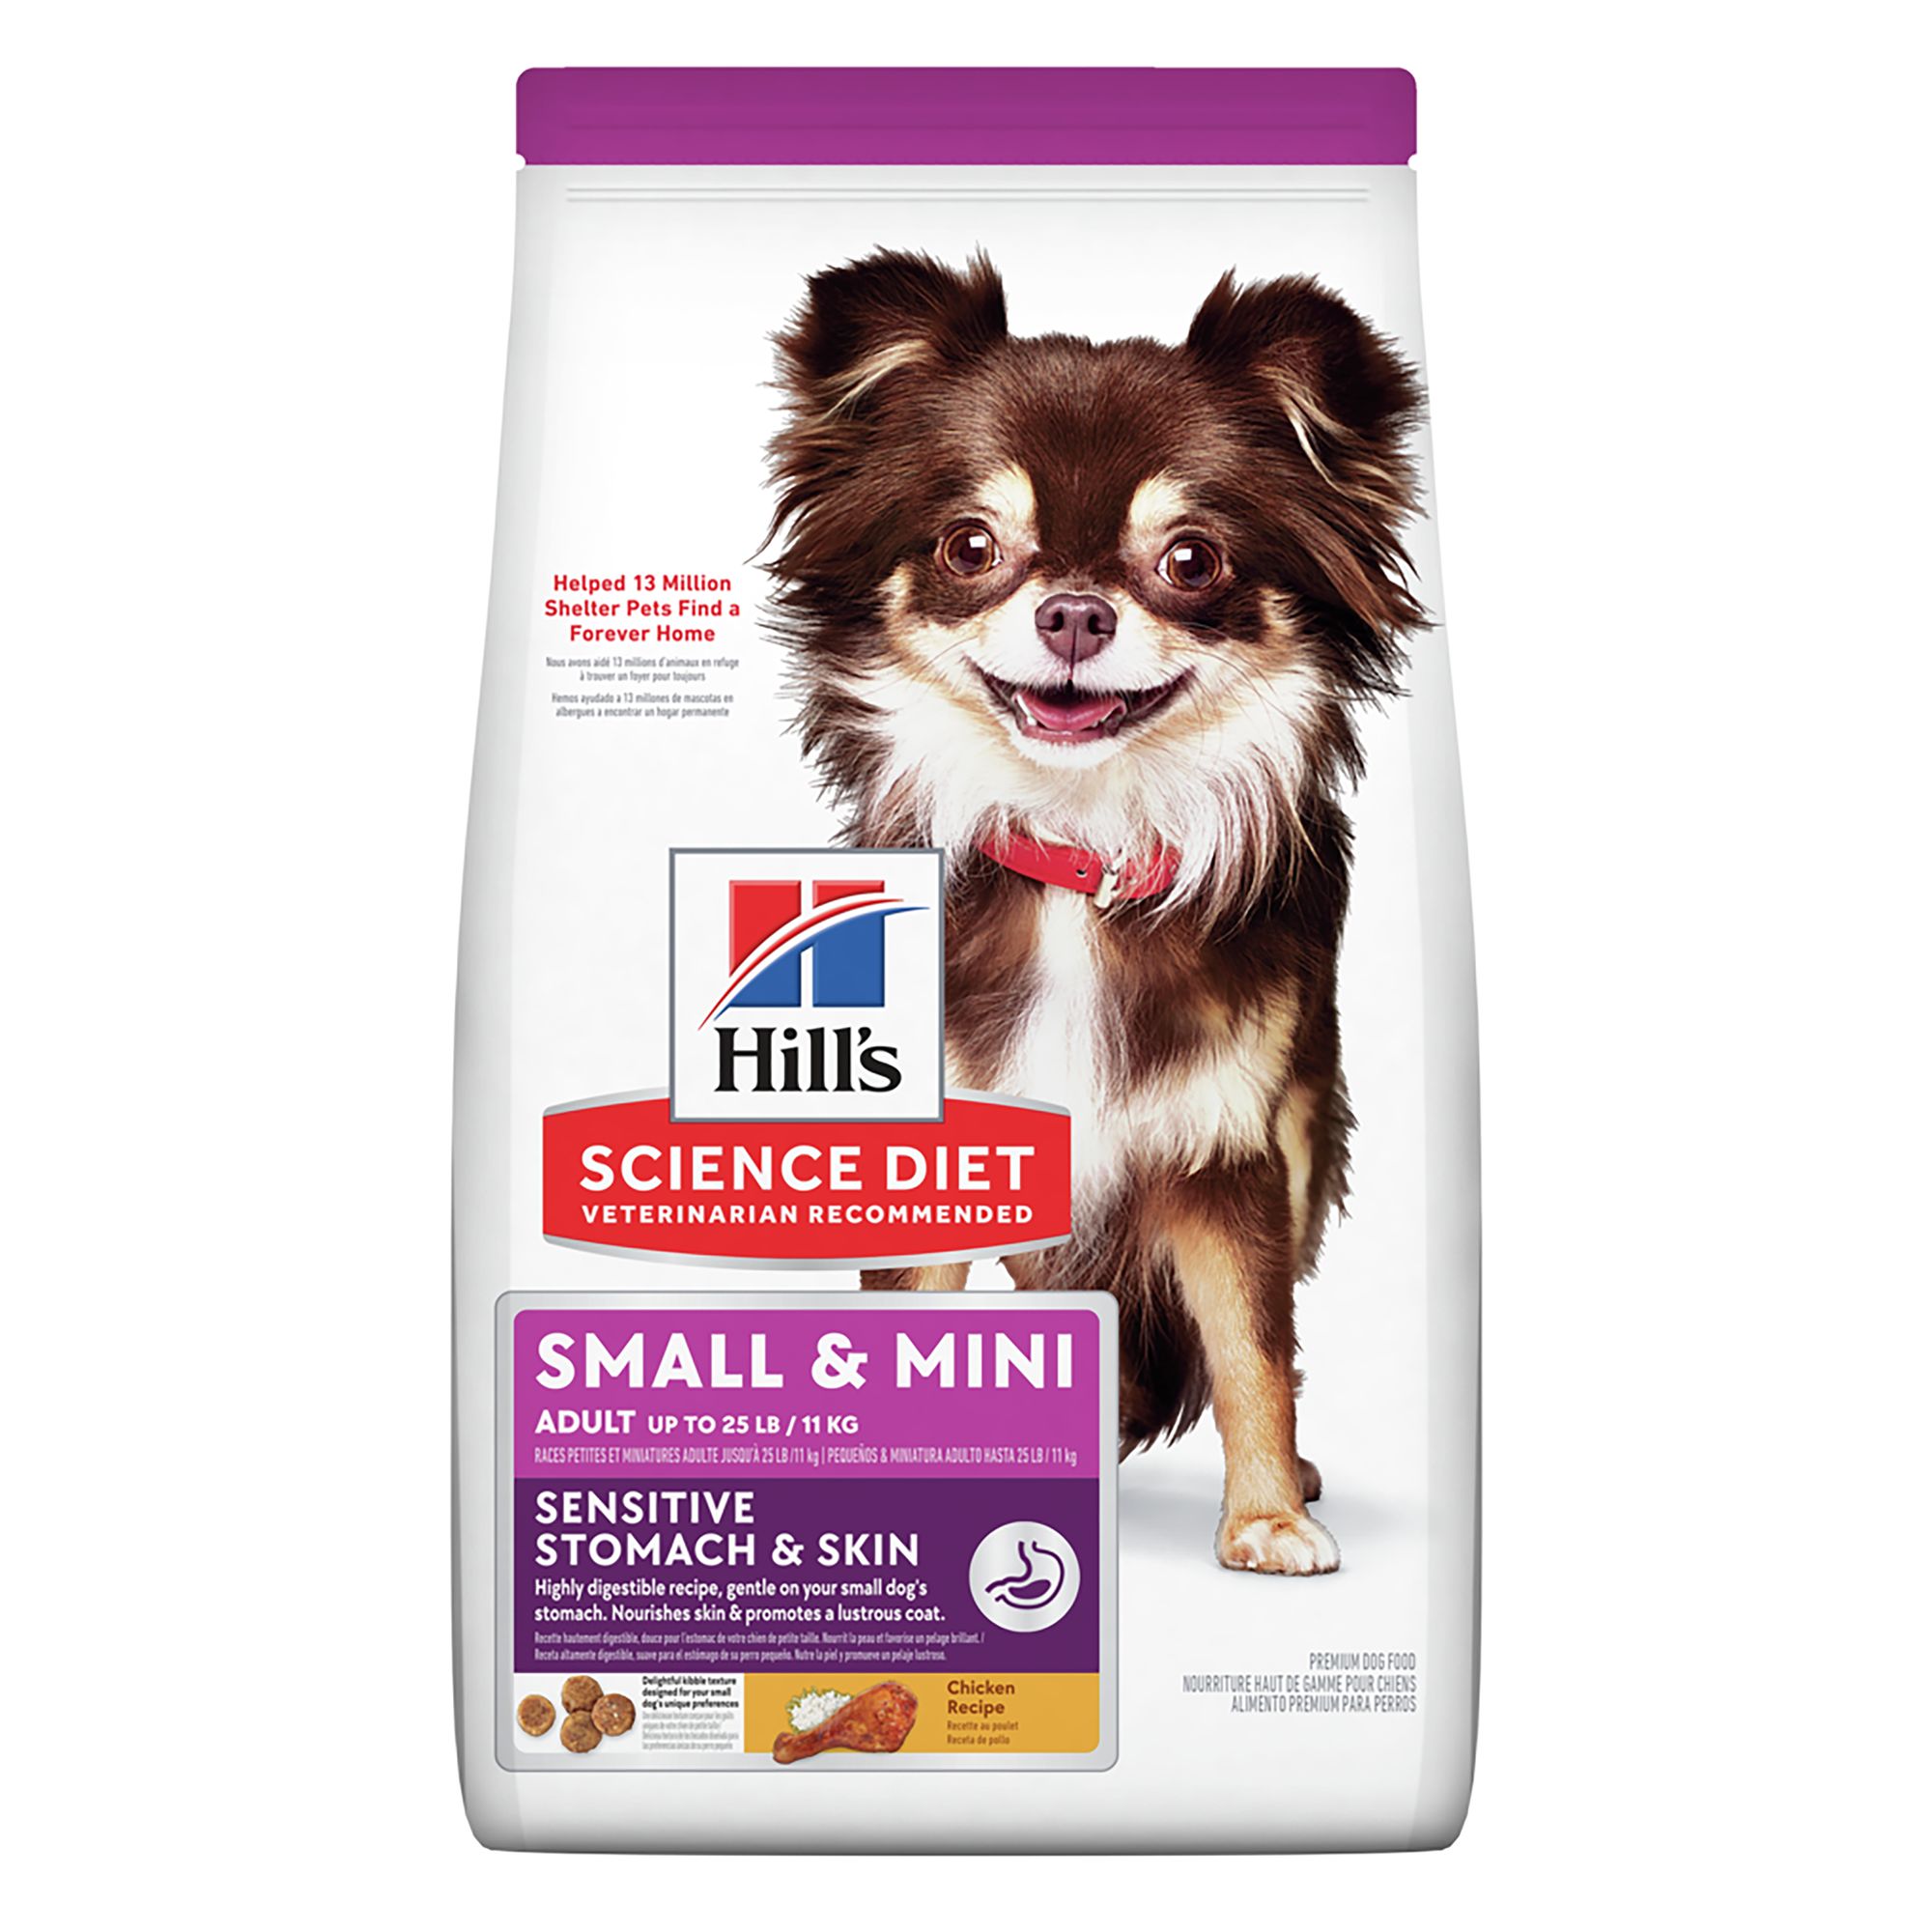 science diet dog treats petsmart